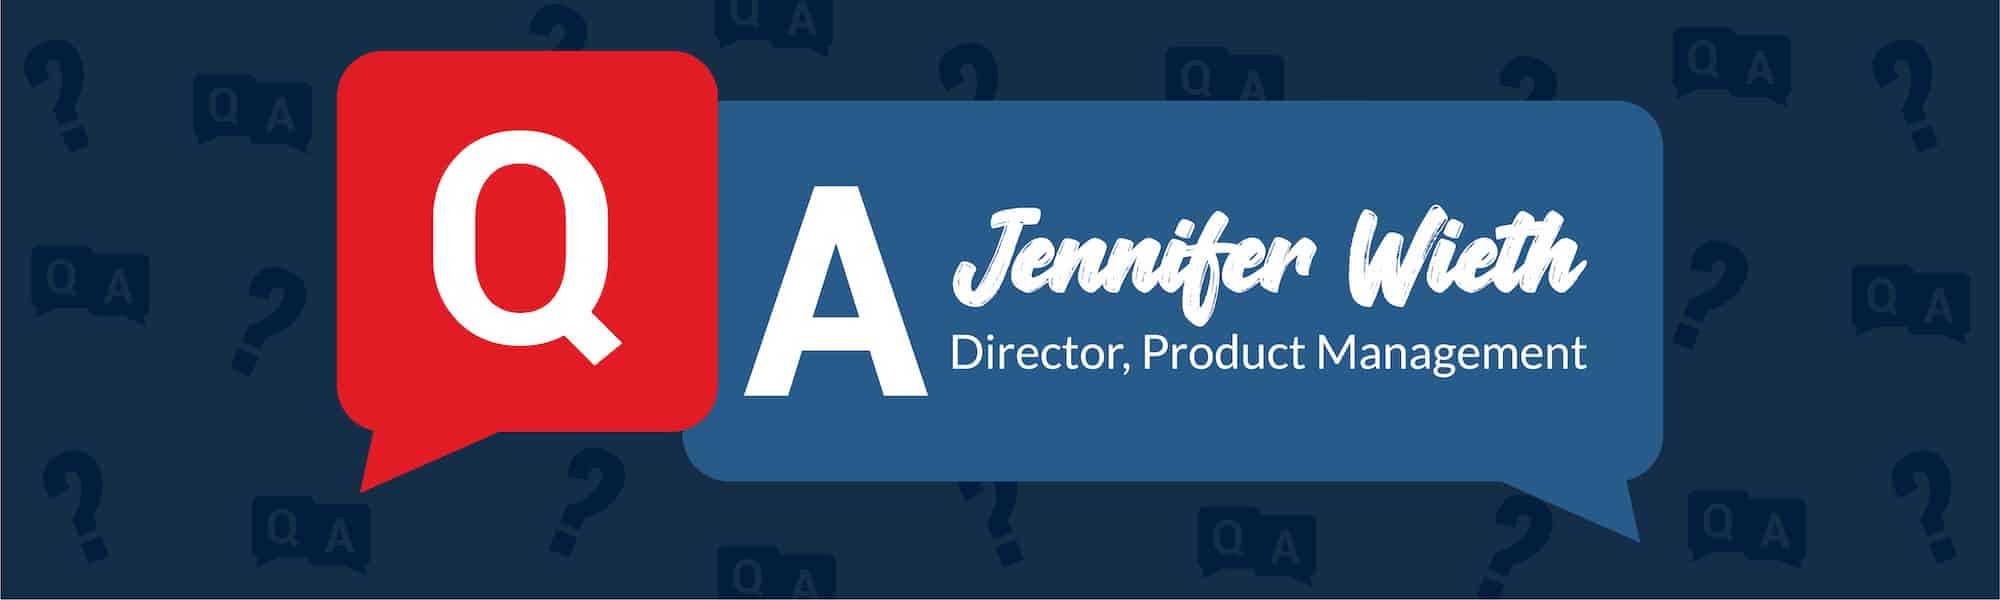 QA-with-Jennifer-Wieth